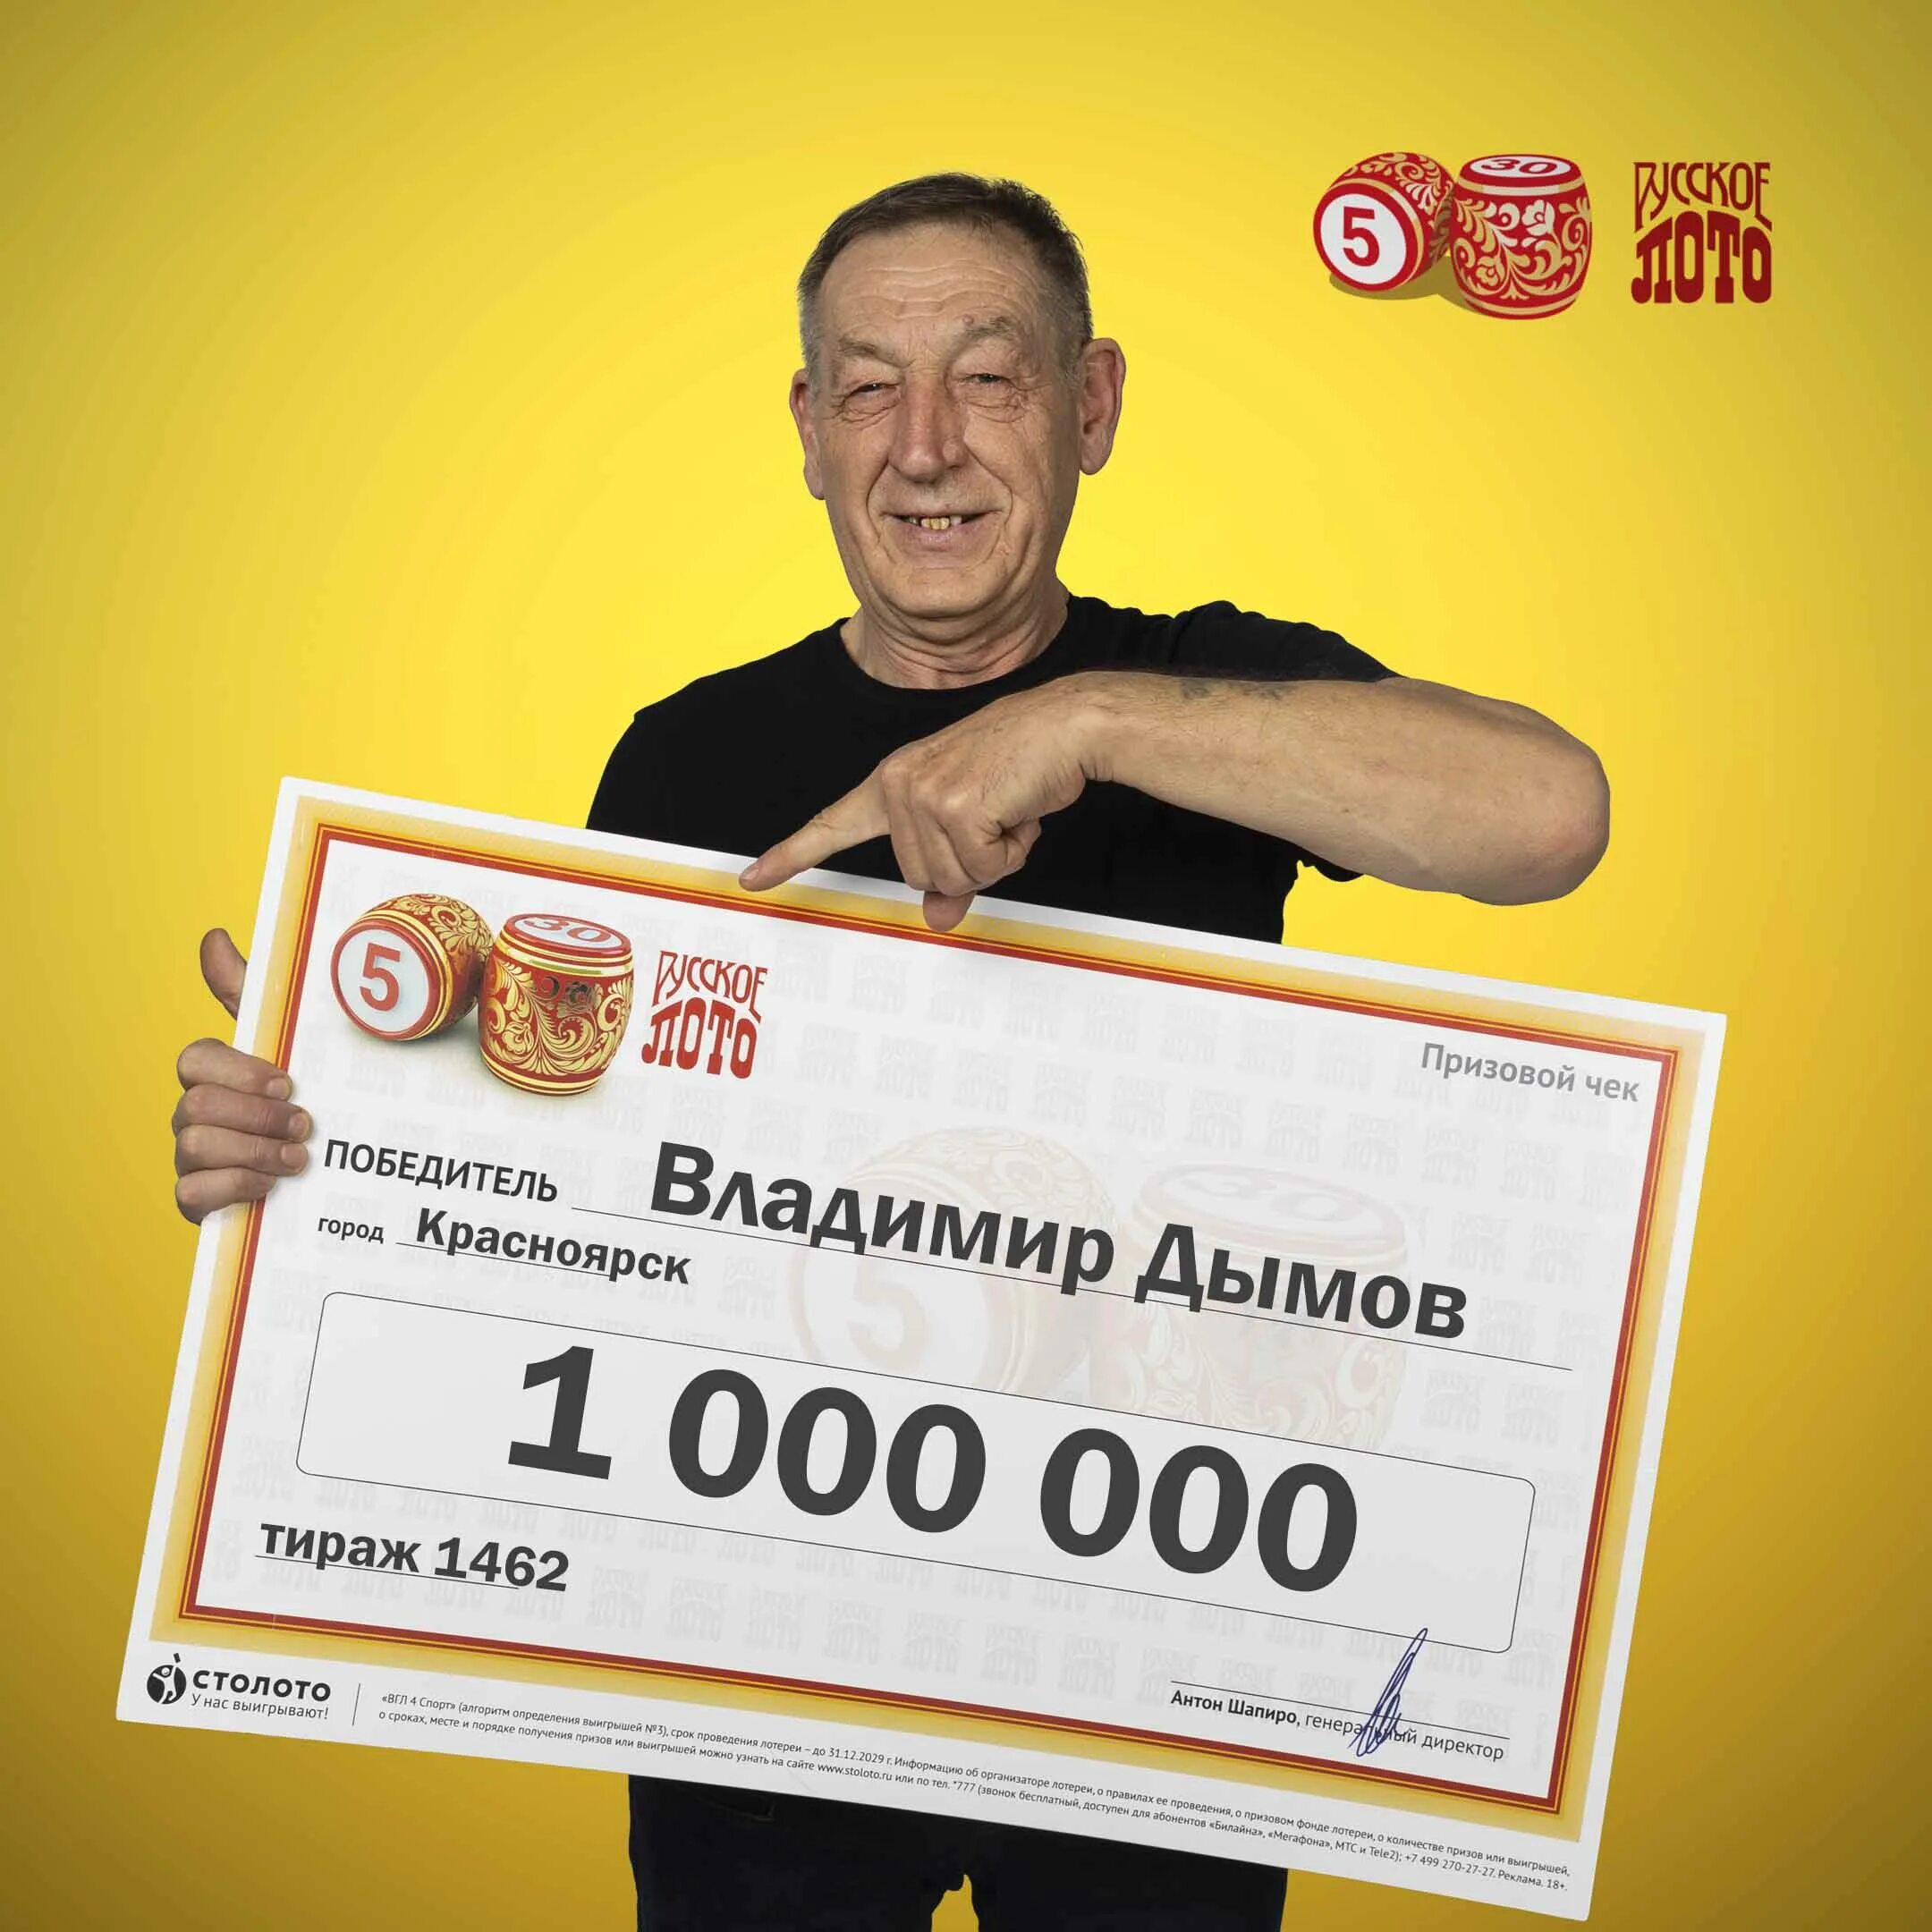 Лотерея миллион рублей. Выигрыш в лотерею. Выигрыш в лото. Выигрыш в лотерею русское лото. Победил в лотерее.